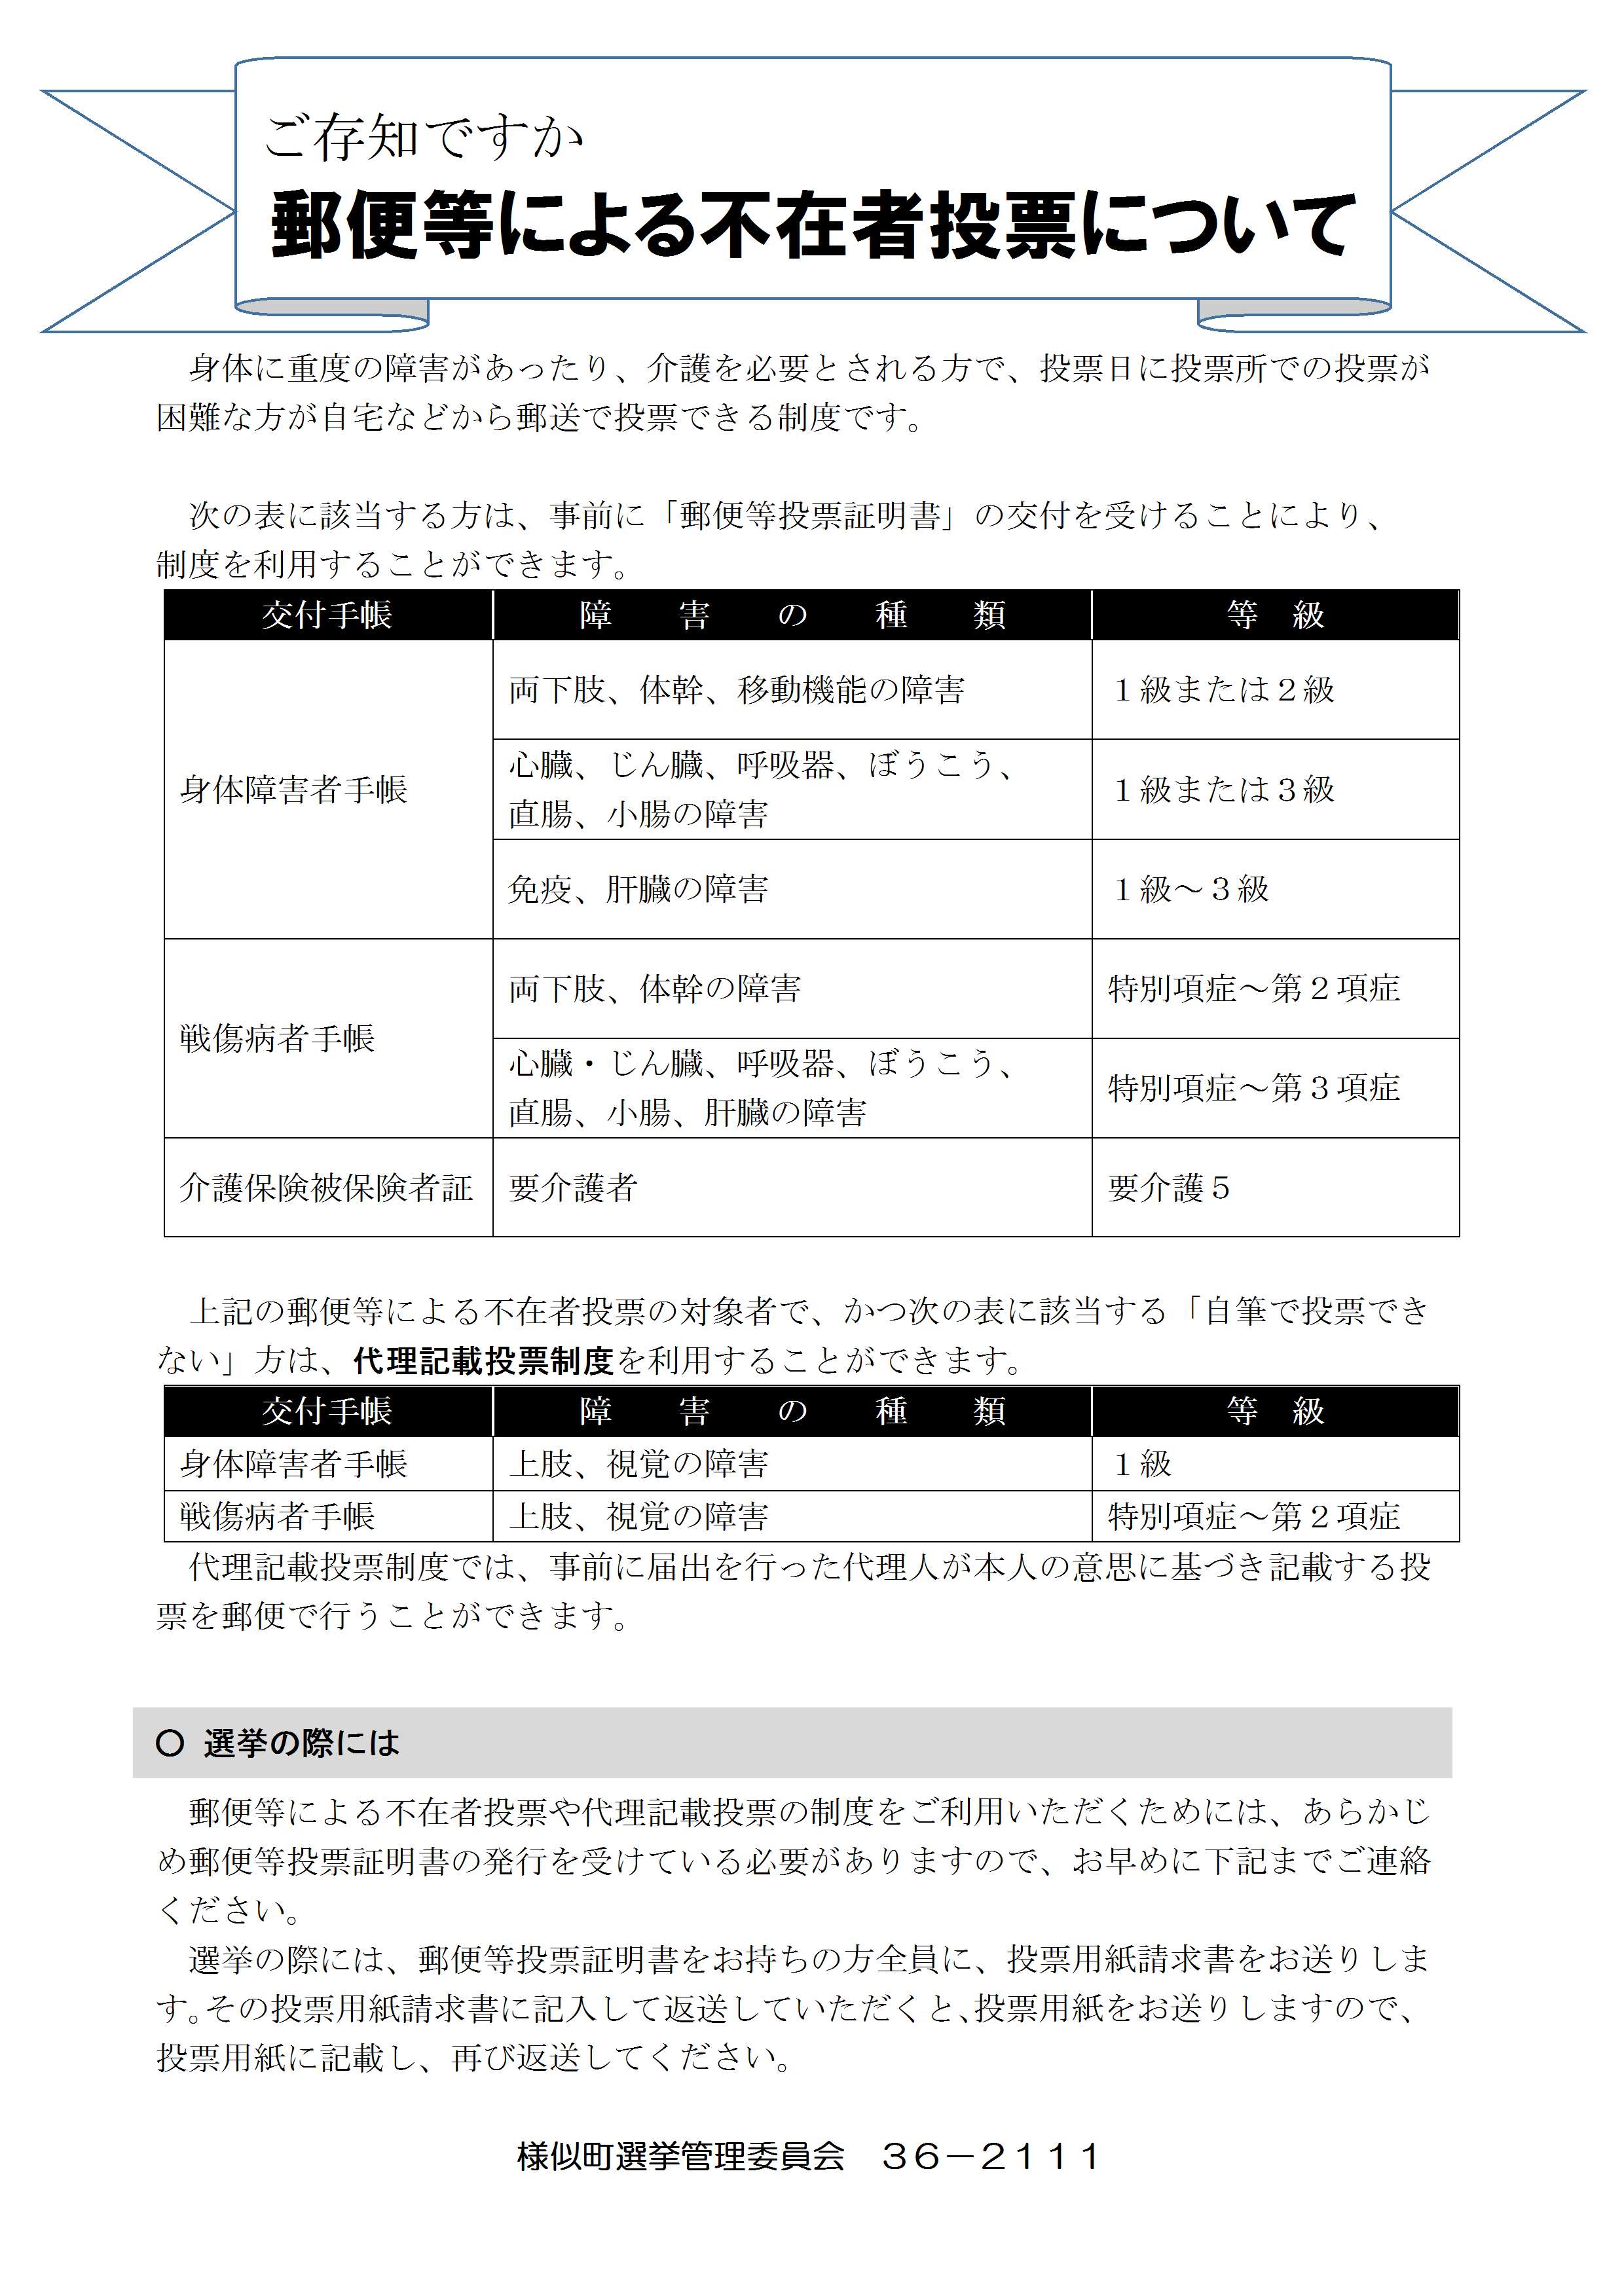 http://www.samani.jp/news/2019/02/06/%E9%83%B5%E4%BE%BF%E6%8A%95%E7%A5%A8%E5%88%B6%E5%BA%A6.jpg